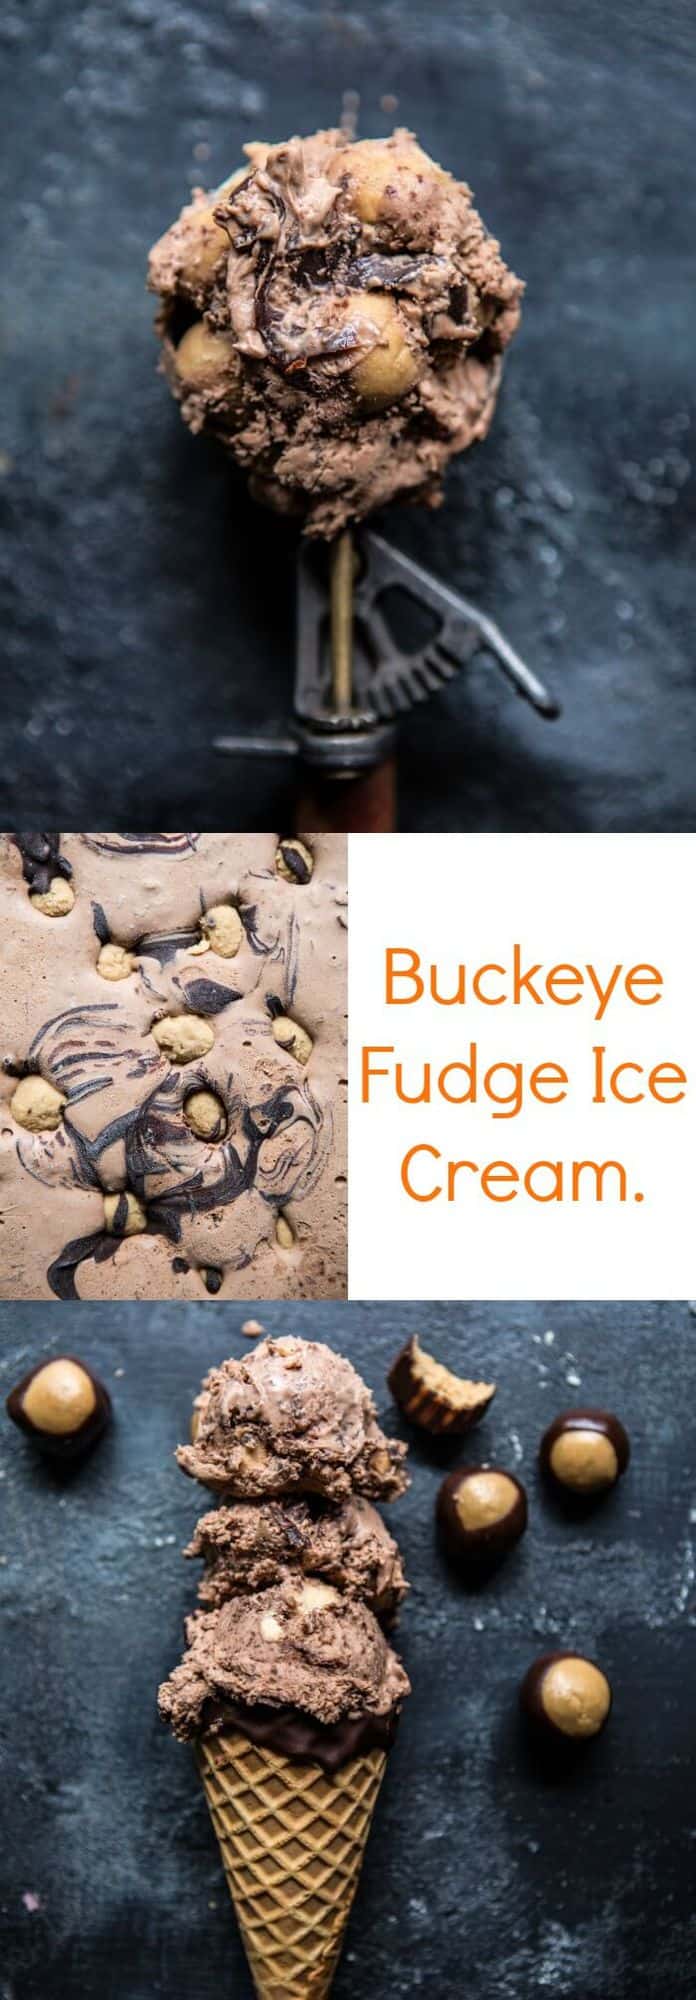 Buckeye软糖冰淇淋|halfbakedharvest.com @hbharvest.